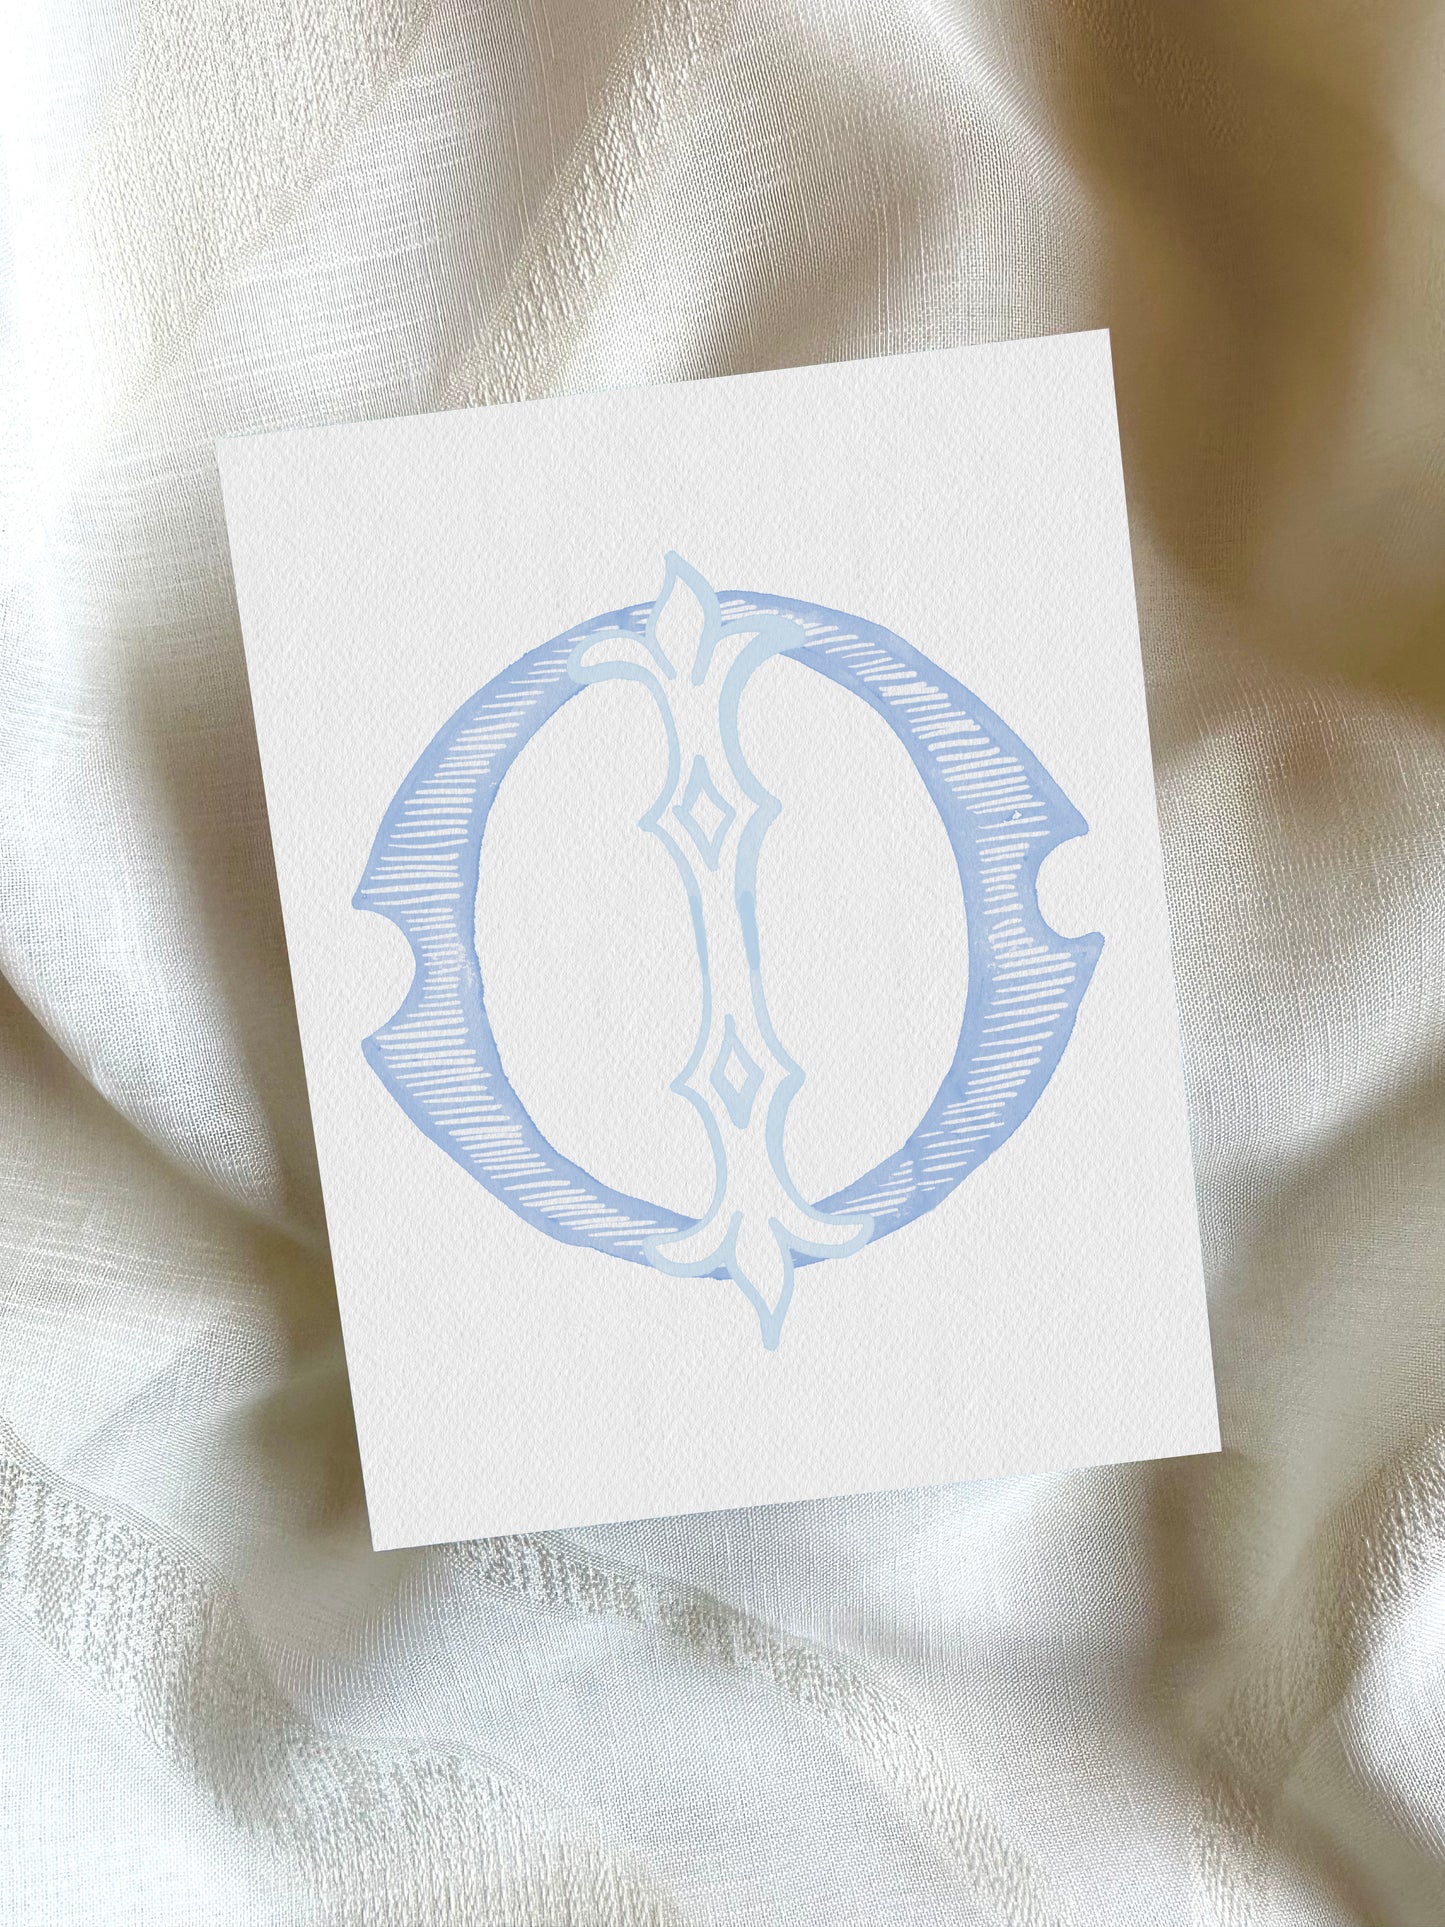 2 Letter Monogram with Letters IO OI | Digital Download - Wedding Monogram SVG, Personal Logo, Wedding Logo for Wedding Invitations The Wedding Crest Lab